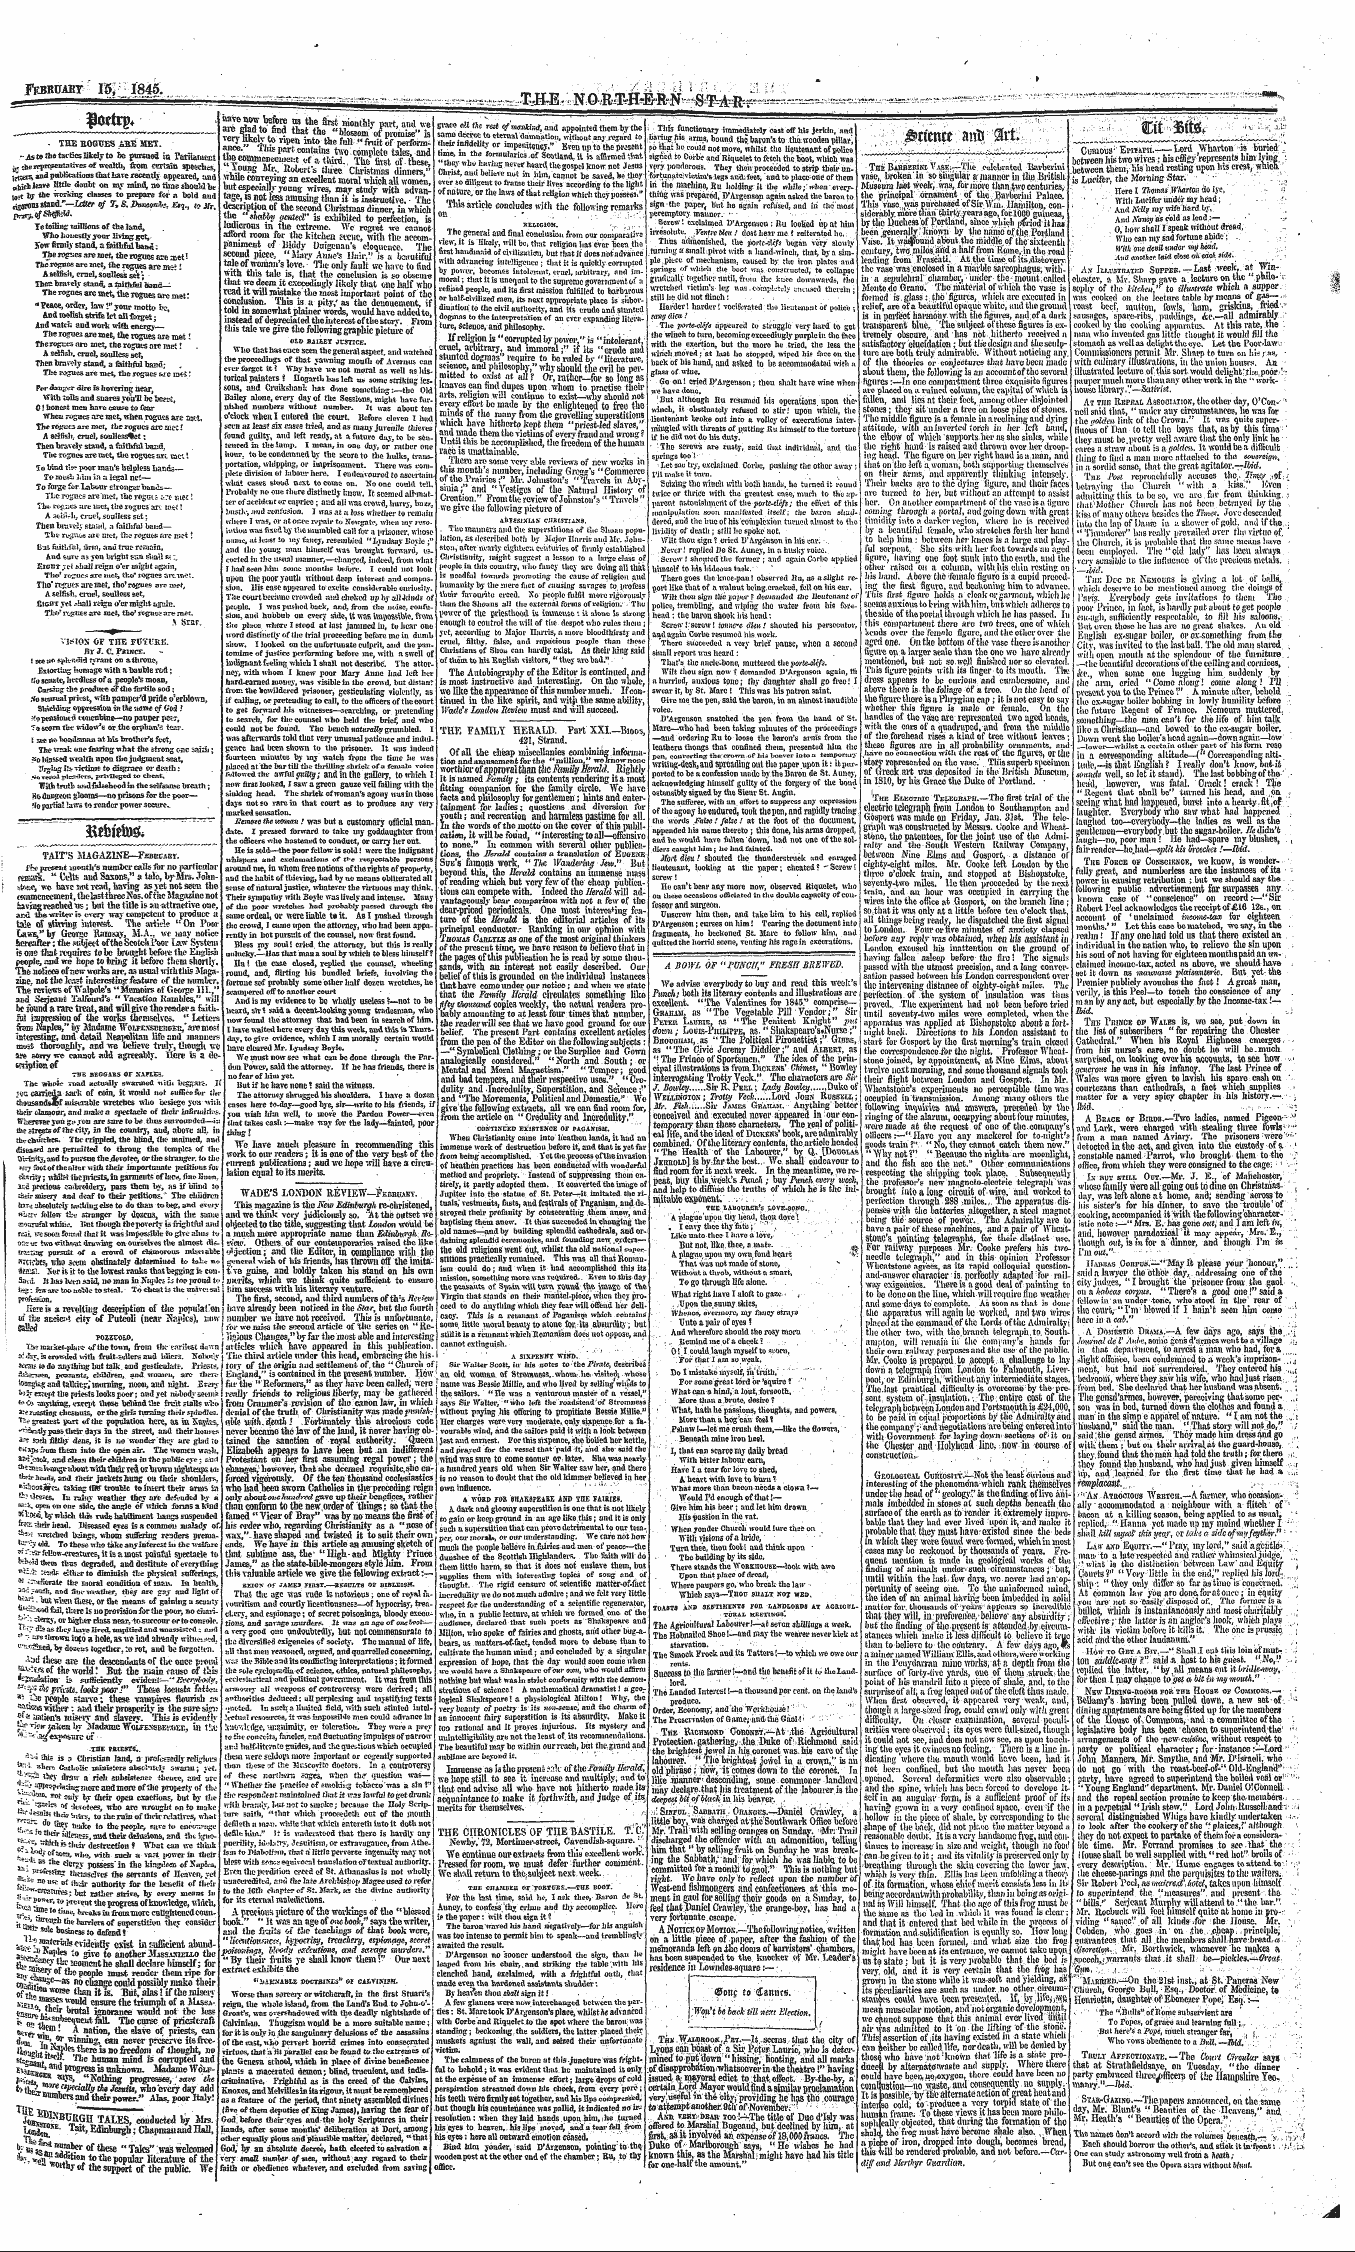 Northern Star (1837-1852): jS F Y, 4th edition - - / - " R T.--,--'- I,' .- ' / .:- ¦ --,...